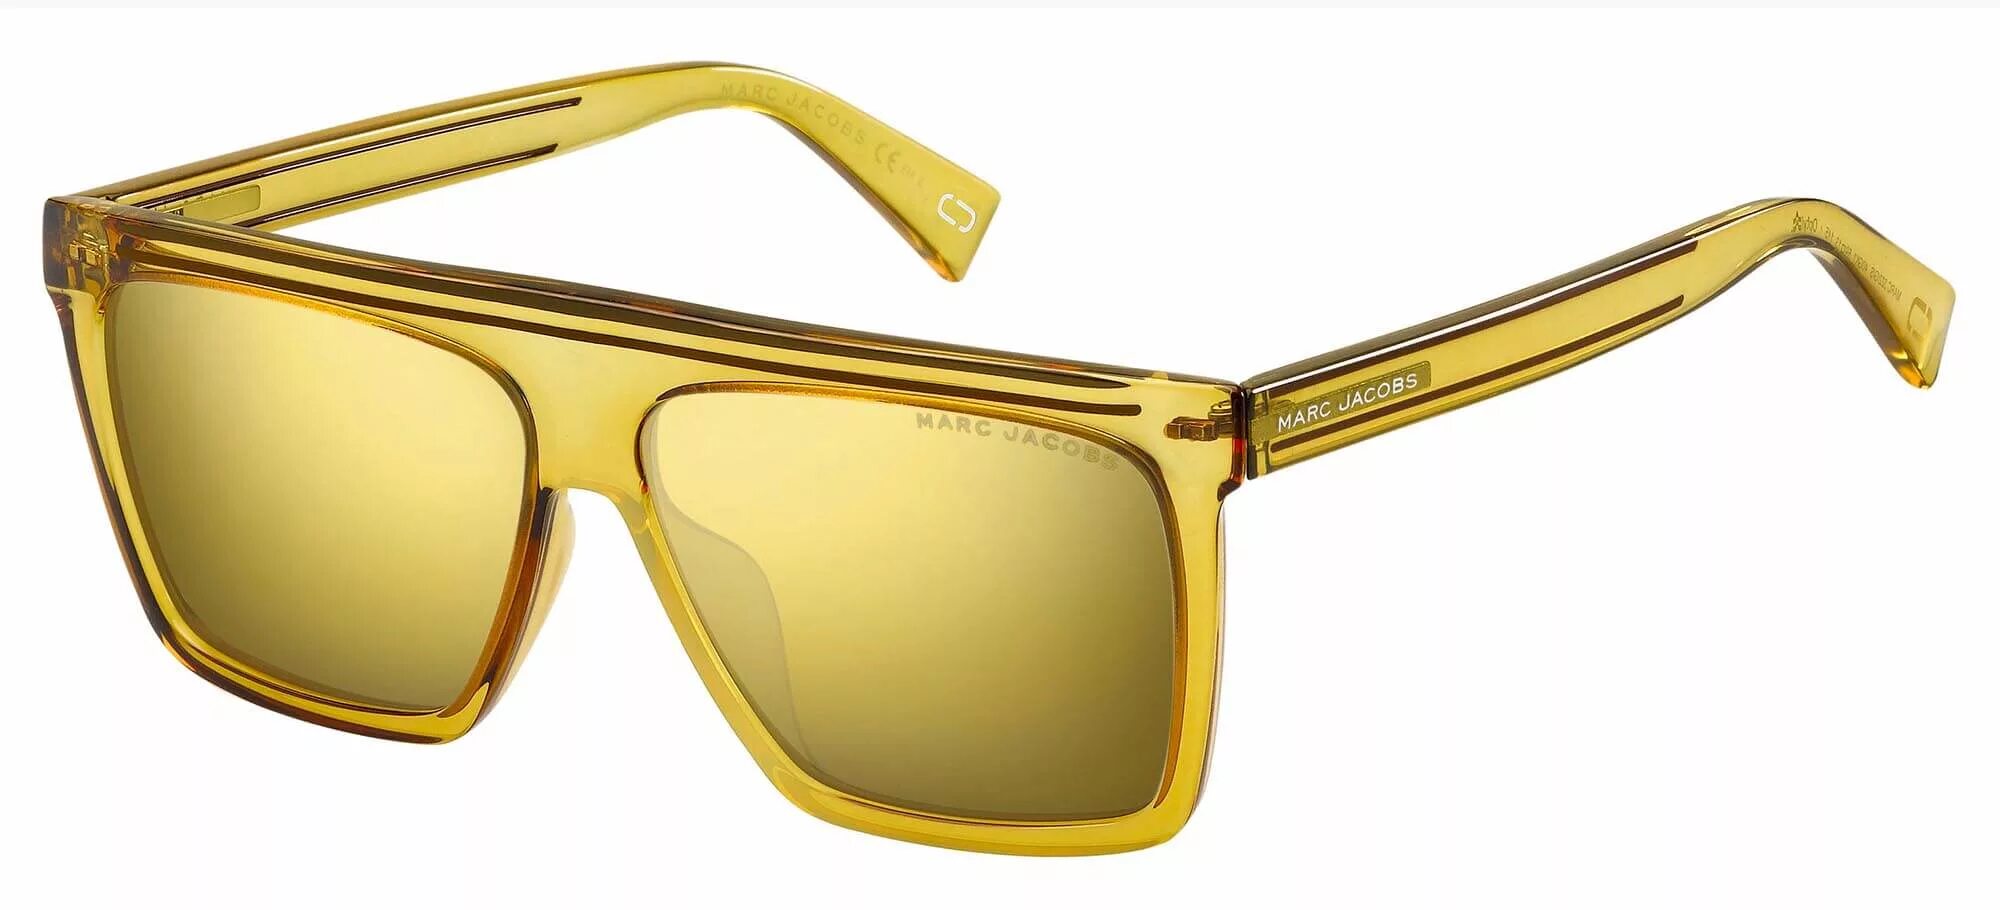 Marc Jacobs очки. Marc Jacobs JAC-20141340g59k1. Золотые очки купить